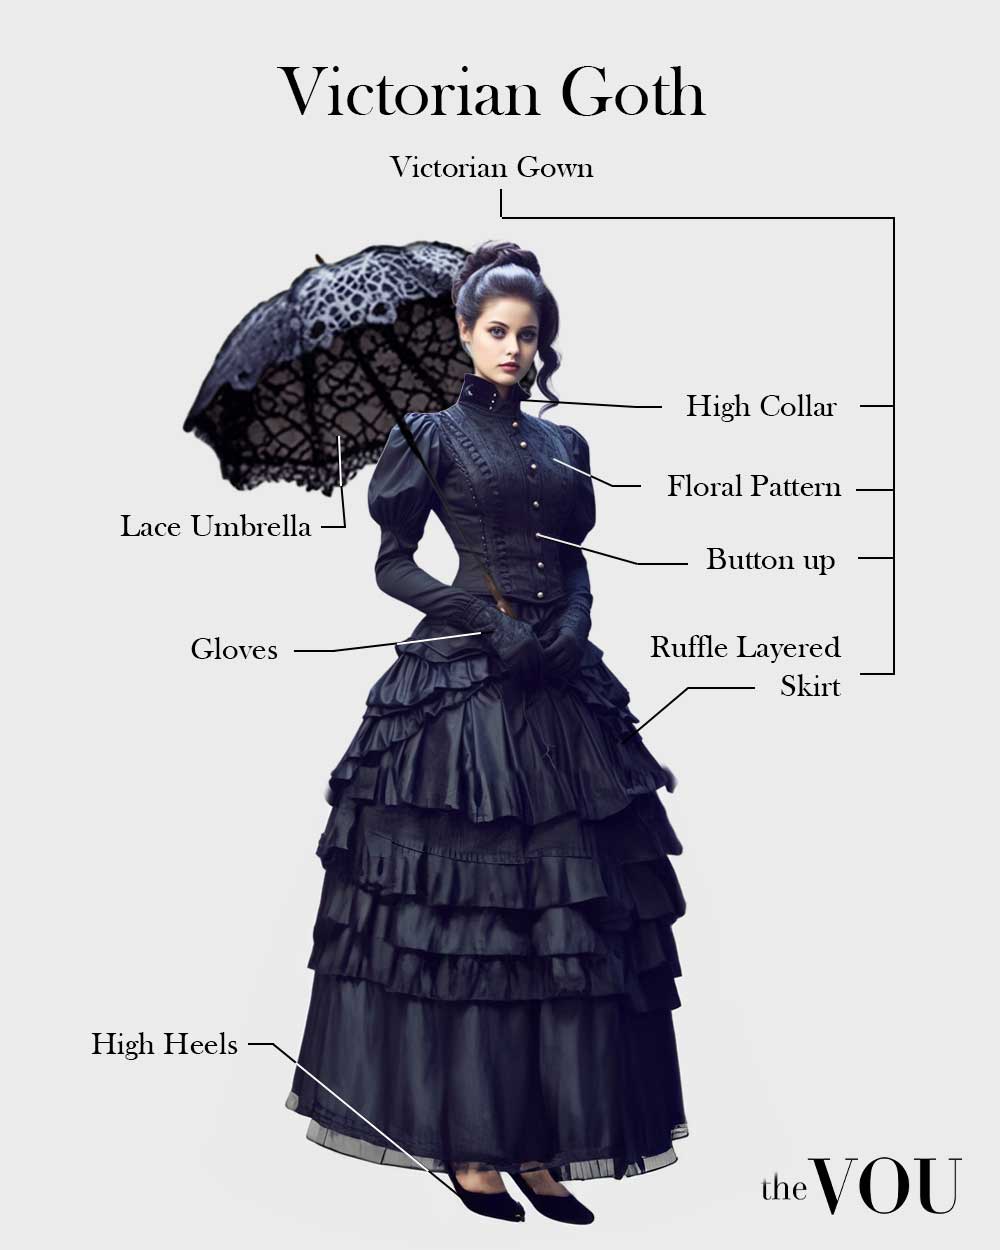 Victorian goth ouftit elements